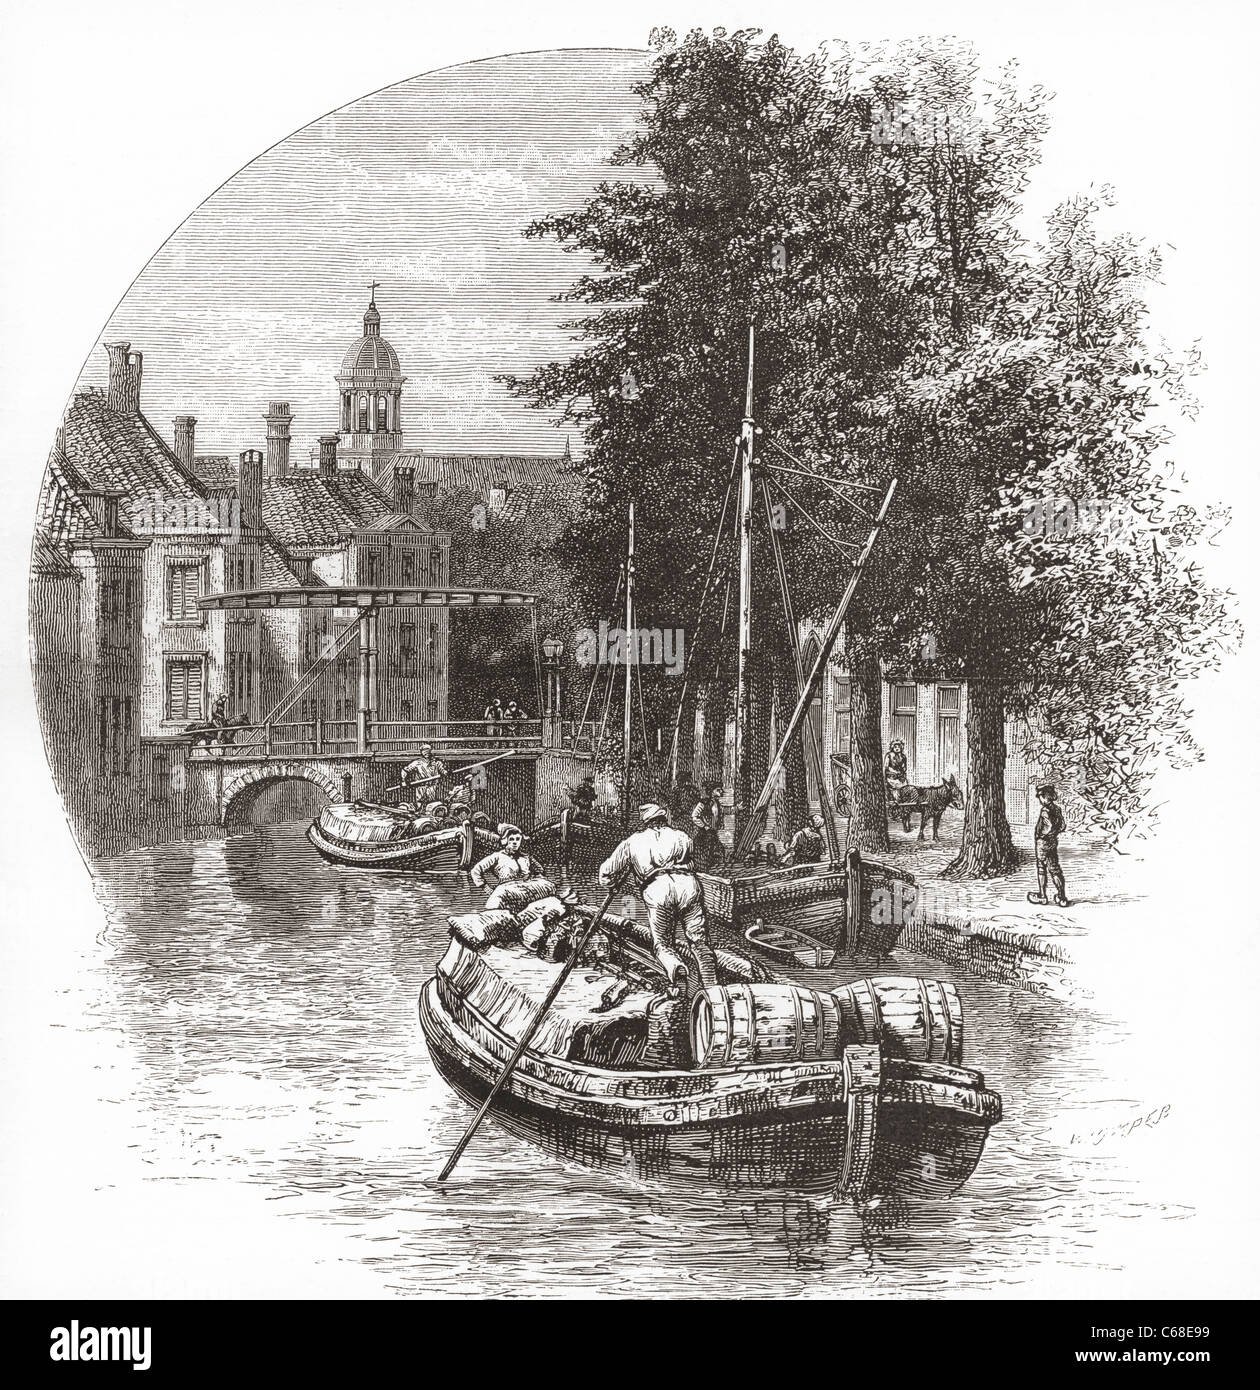 Leiden, Olanda meridionale, Paesi Bassi nel XIX secolo. Foto Stock